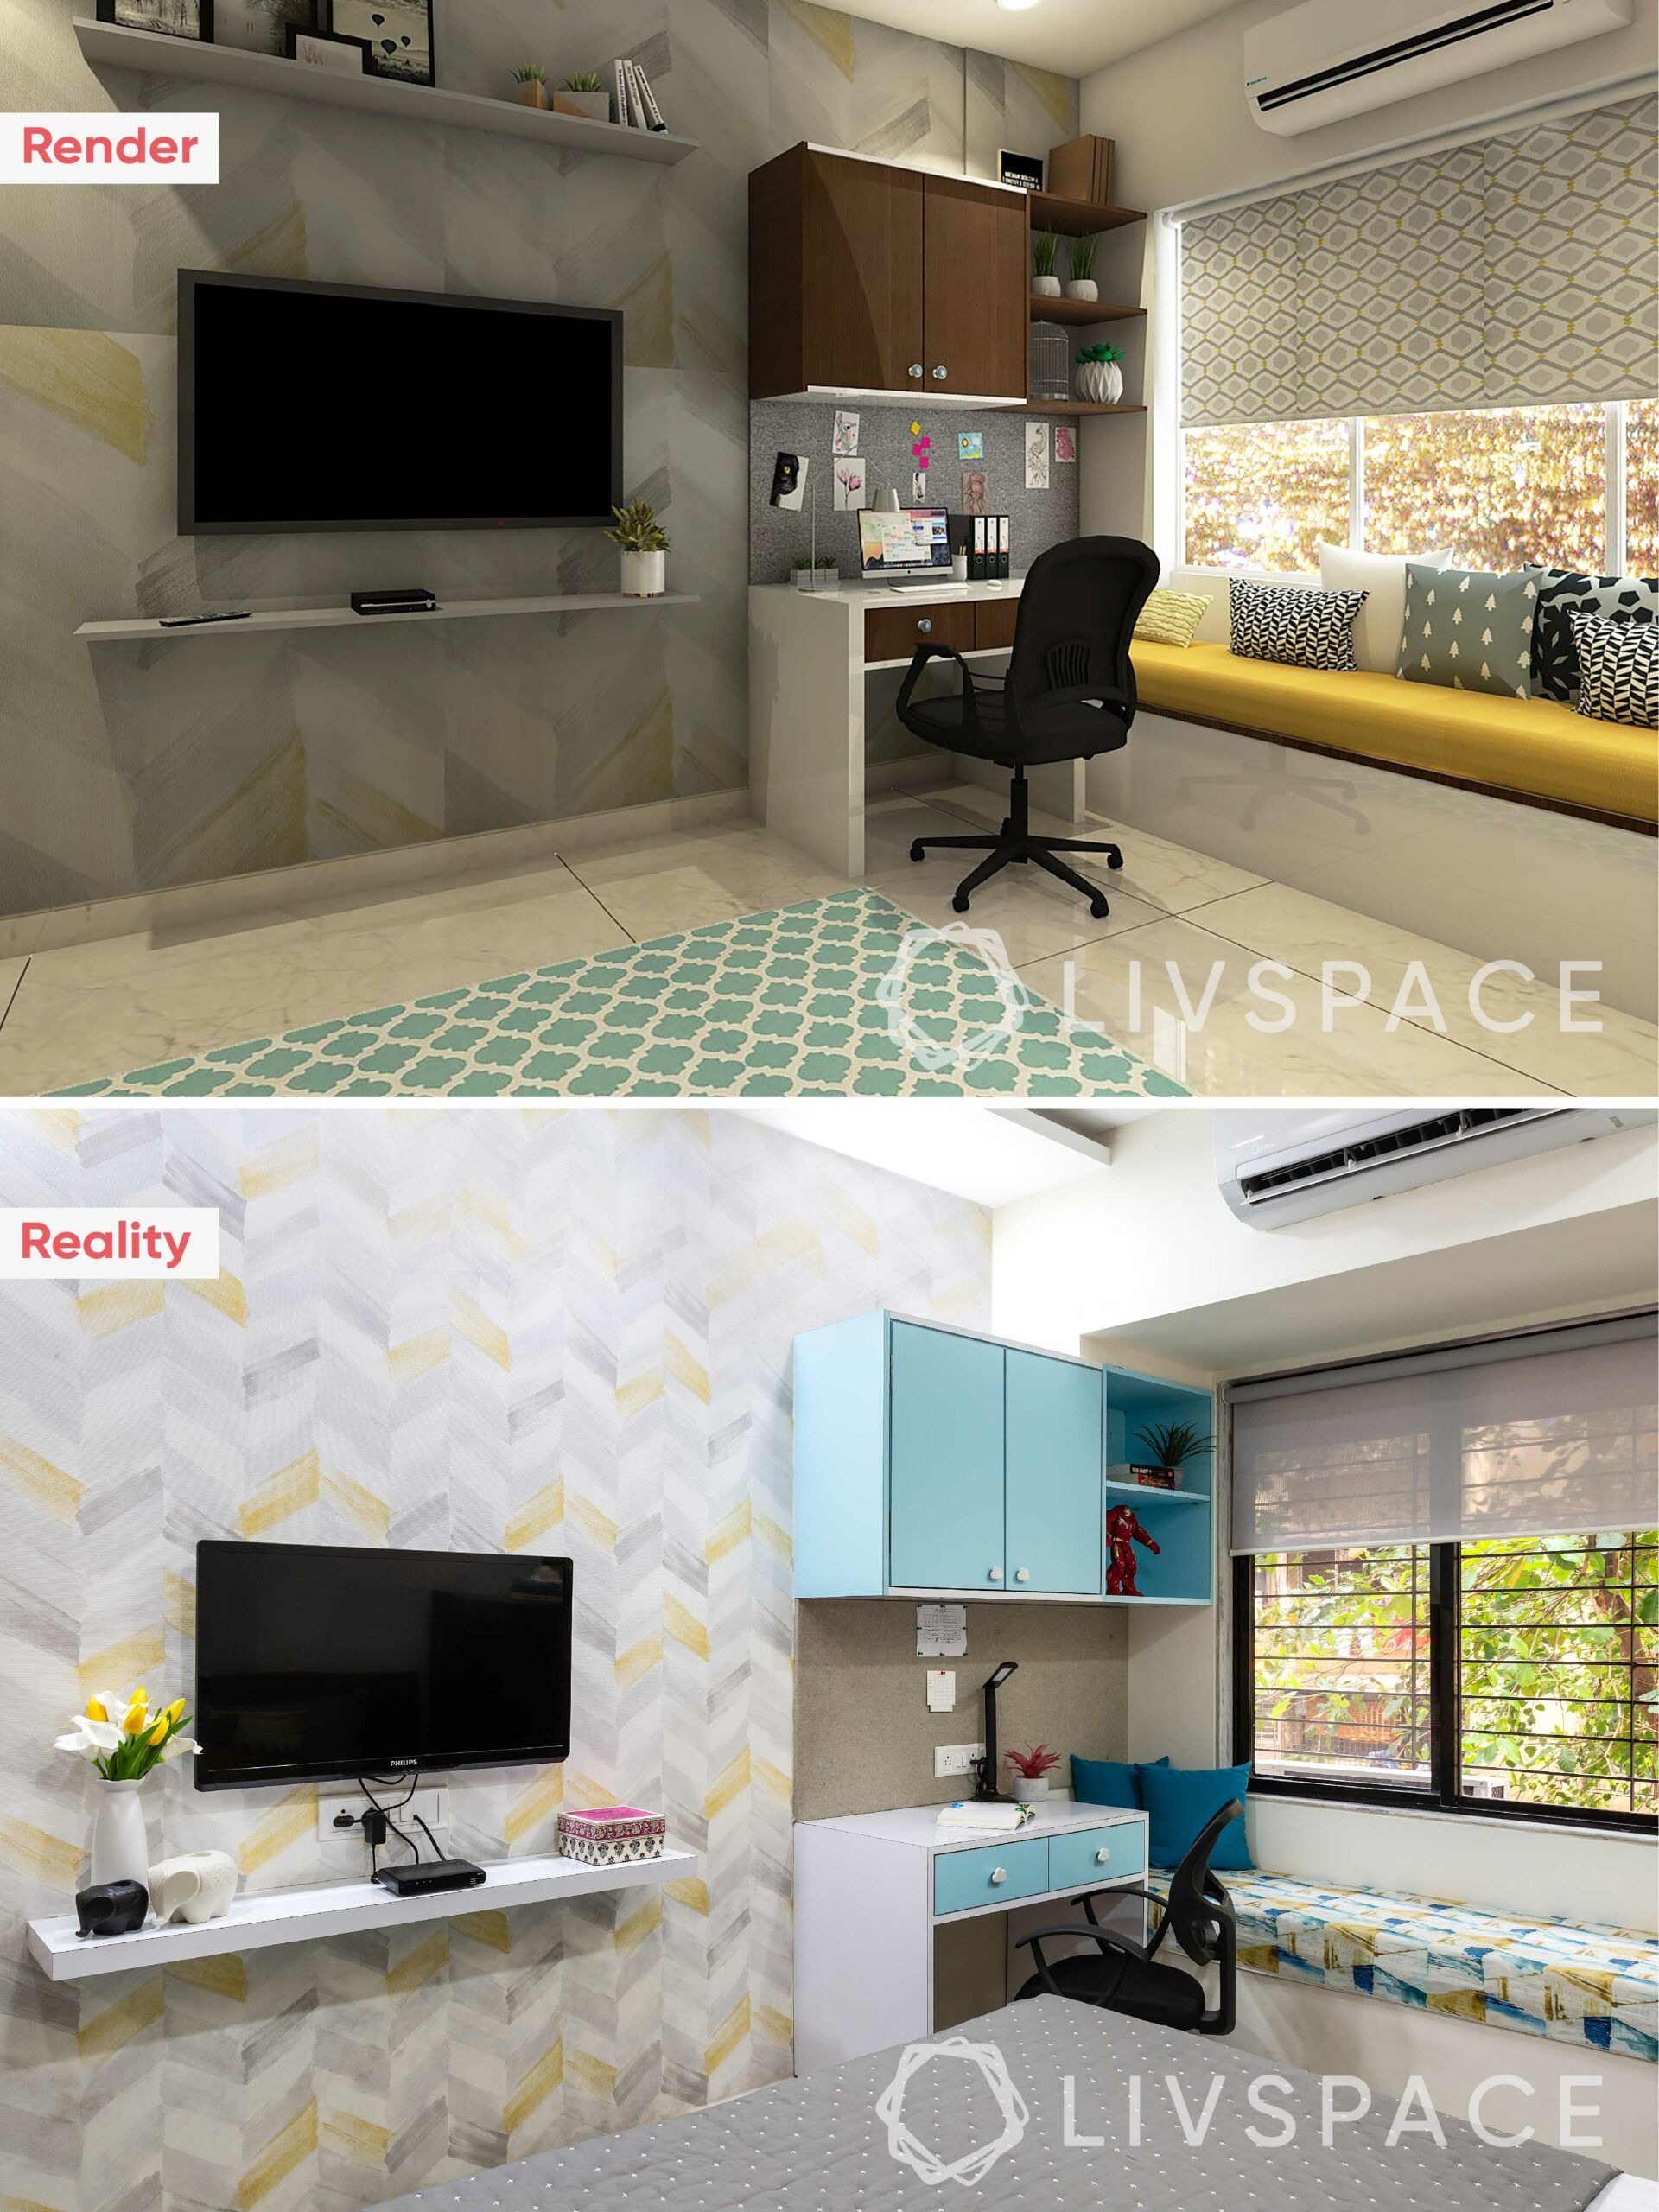 2-bhk-flat-in-mumbai-kids-bedroom-render-reality